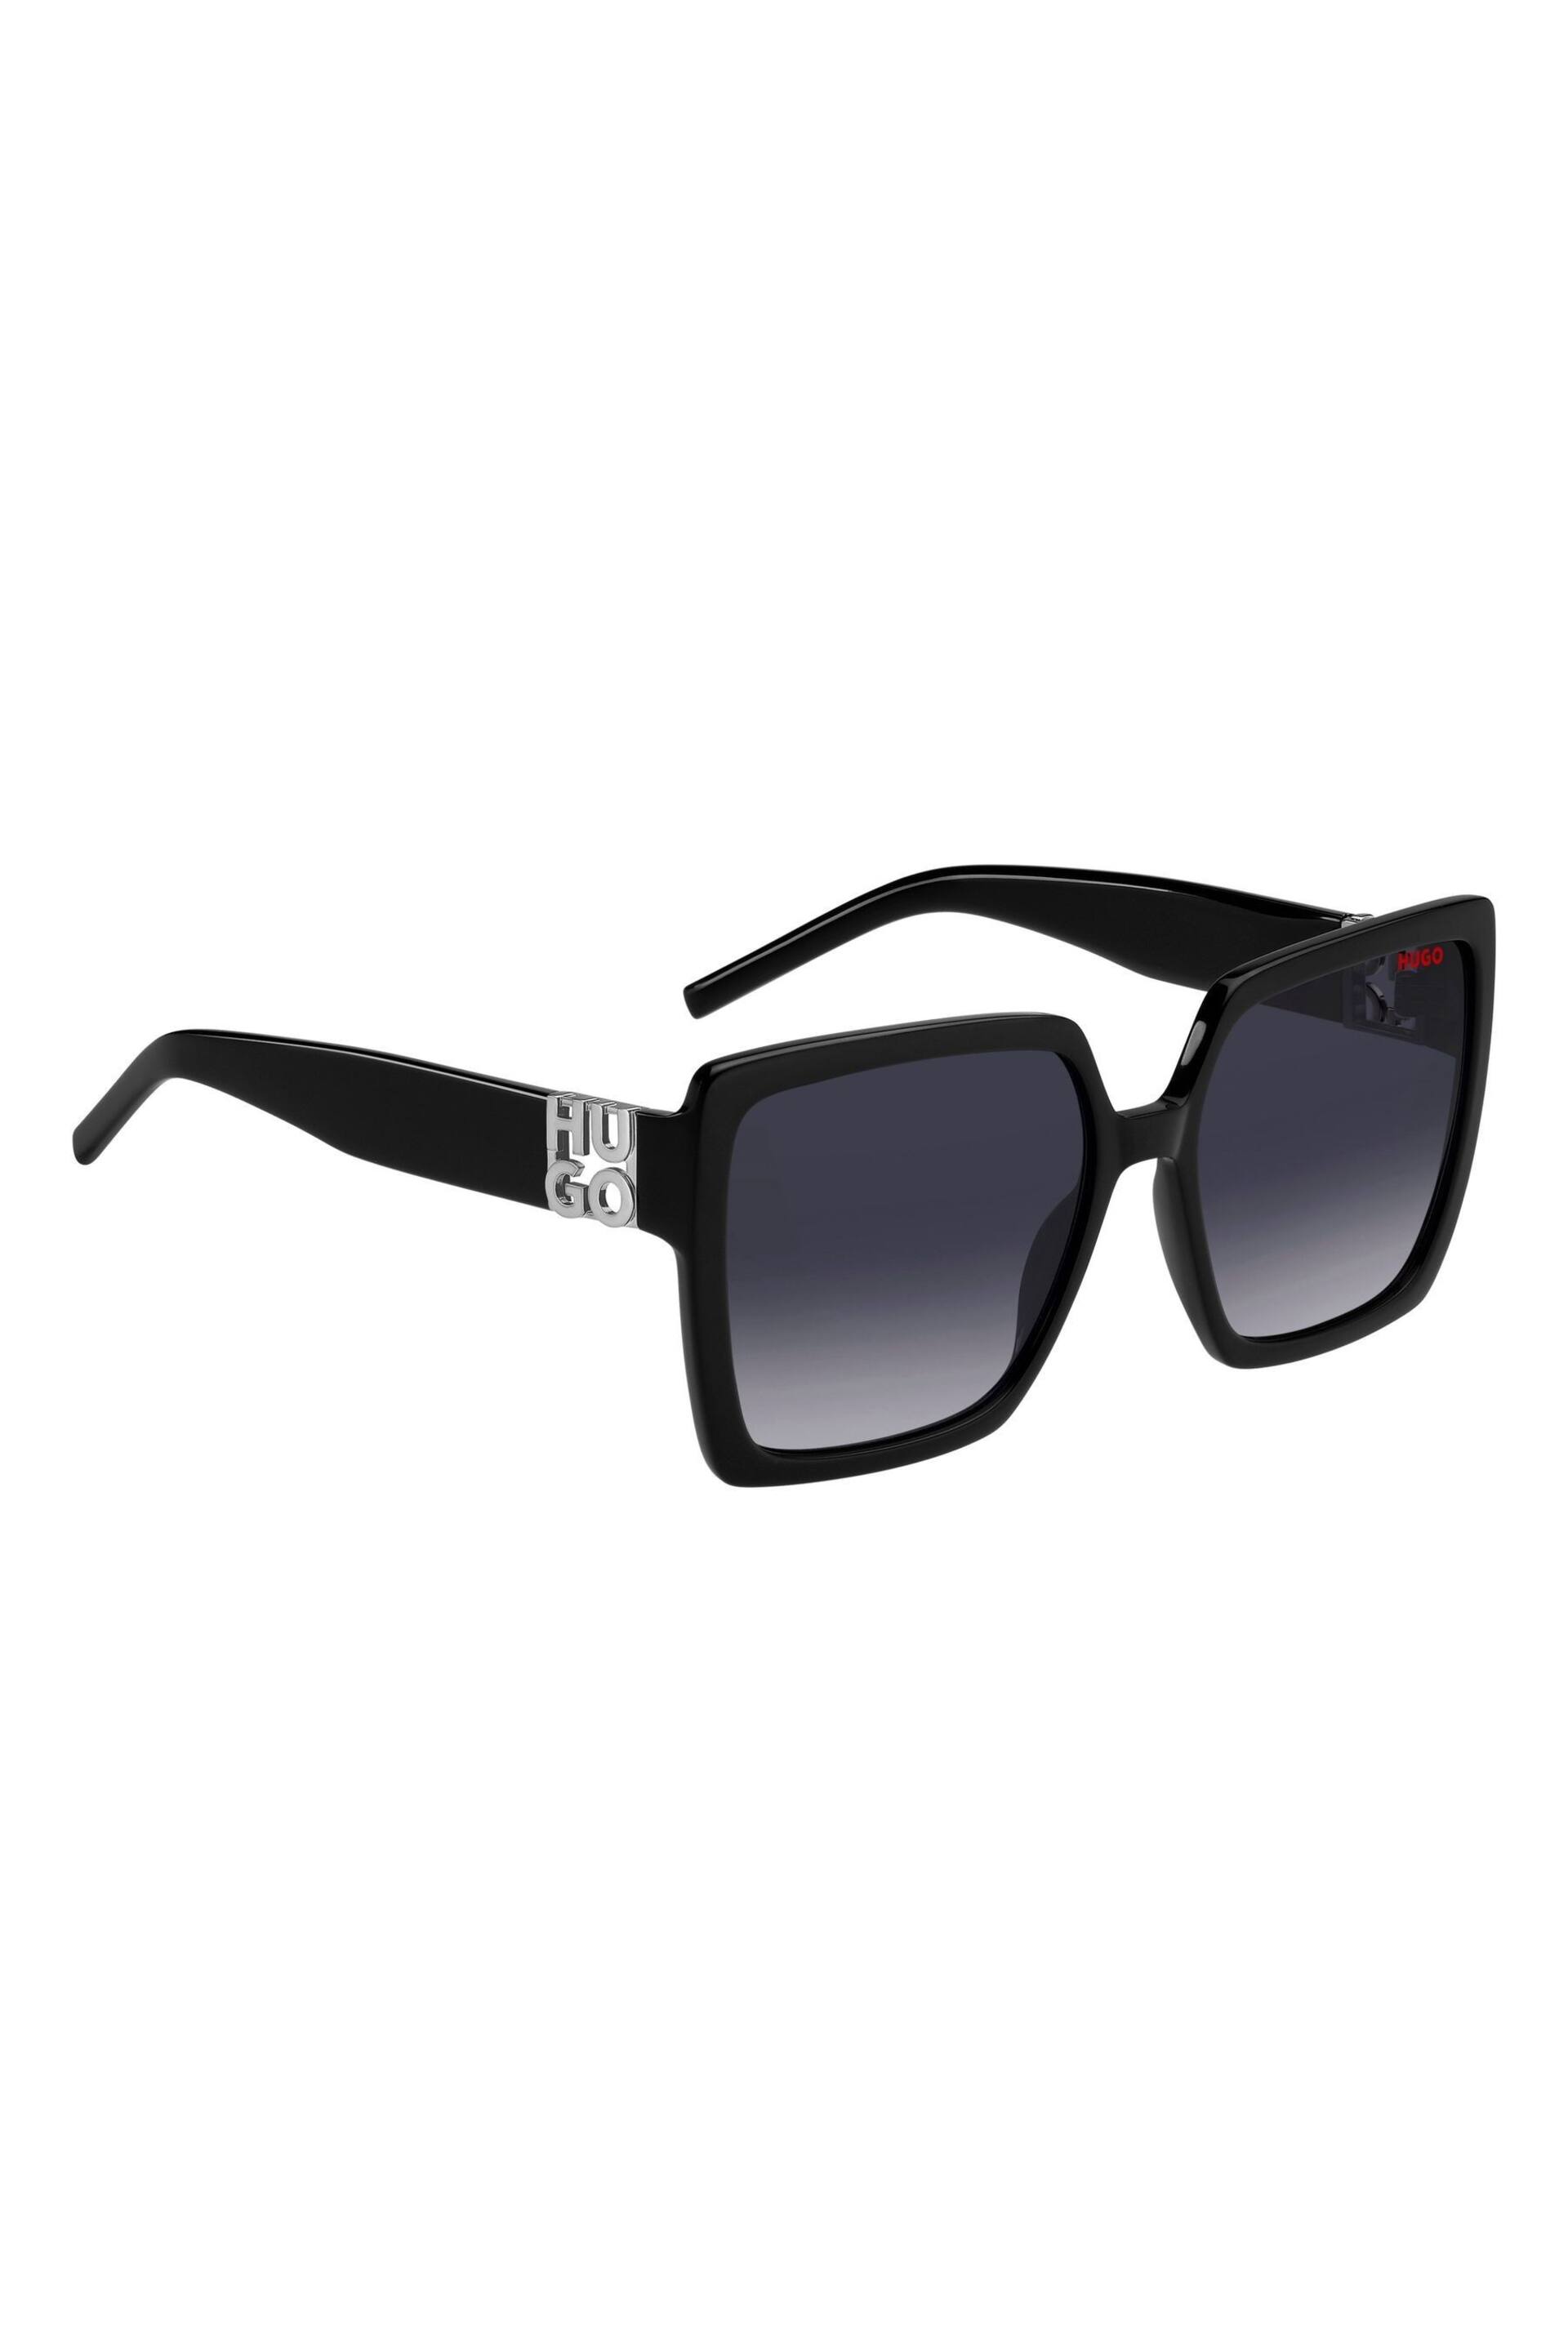 HUGO 1285/S Black Square Sunglasses - Image 2 of 4